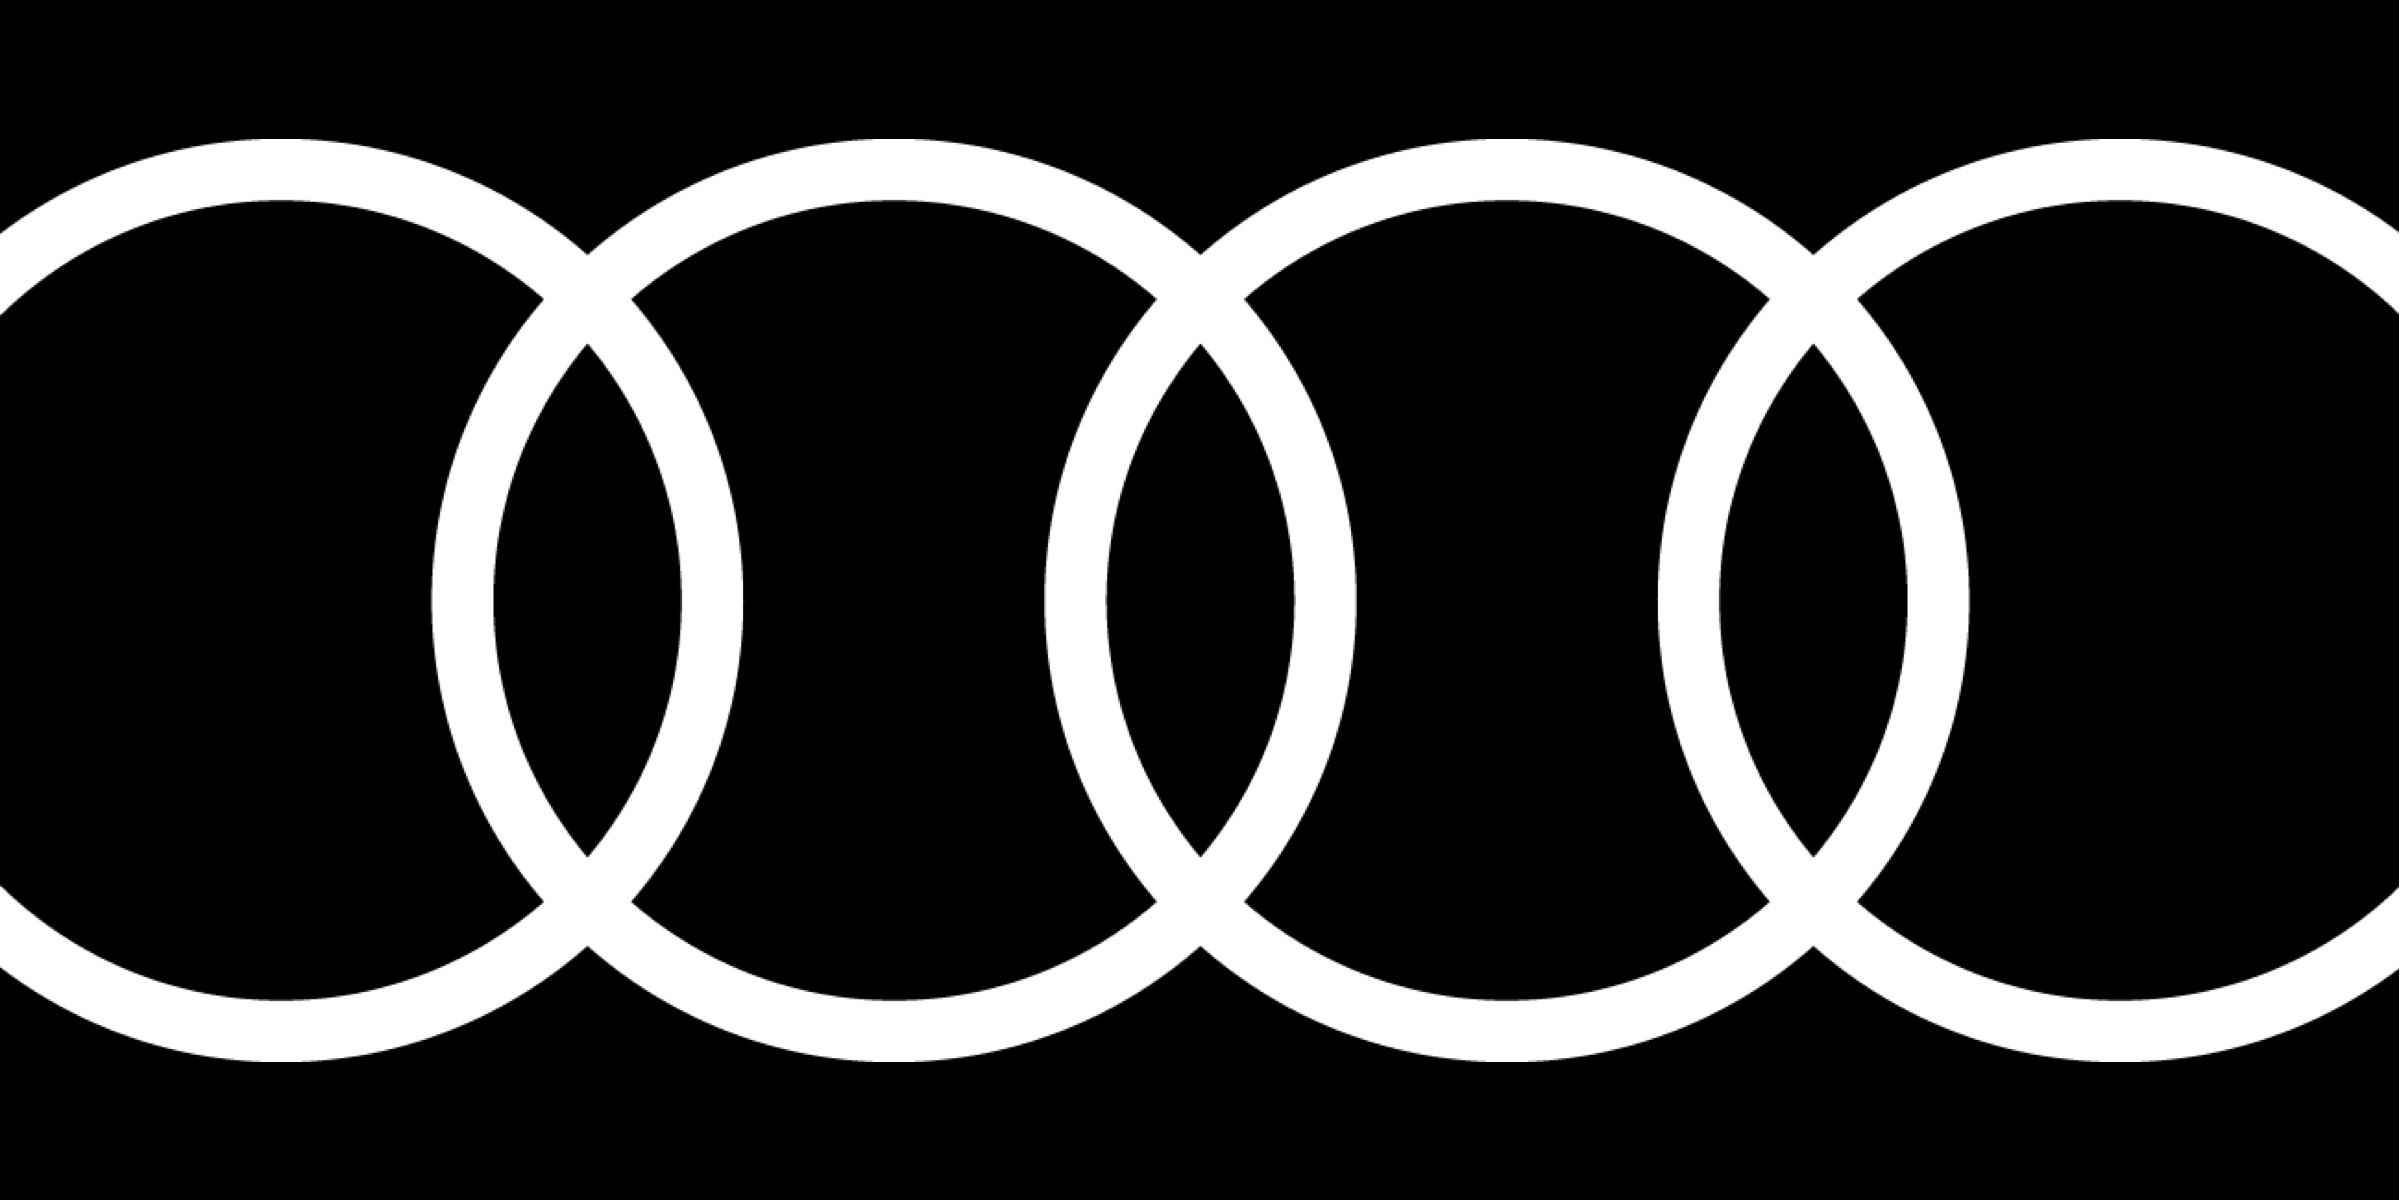 HD wallpaper: Audi Rings Logo, Audi logo, Cars, communication, sign, text,  no people